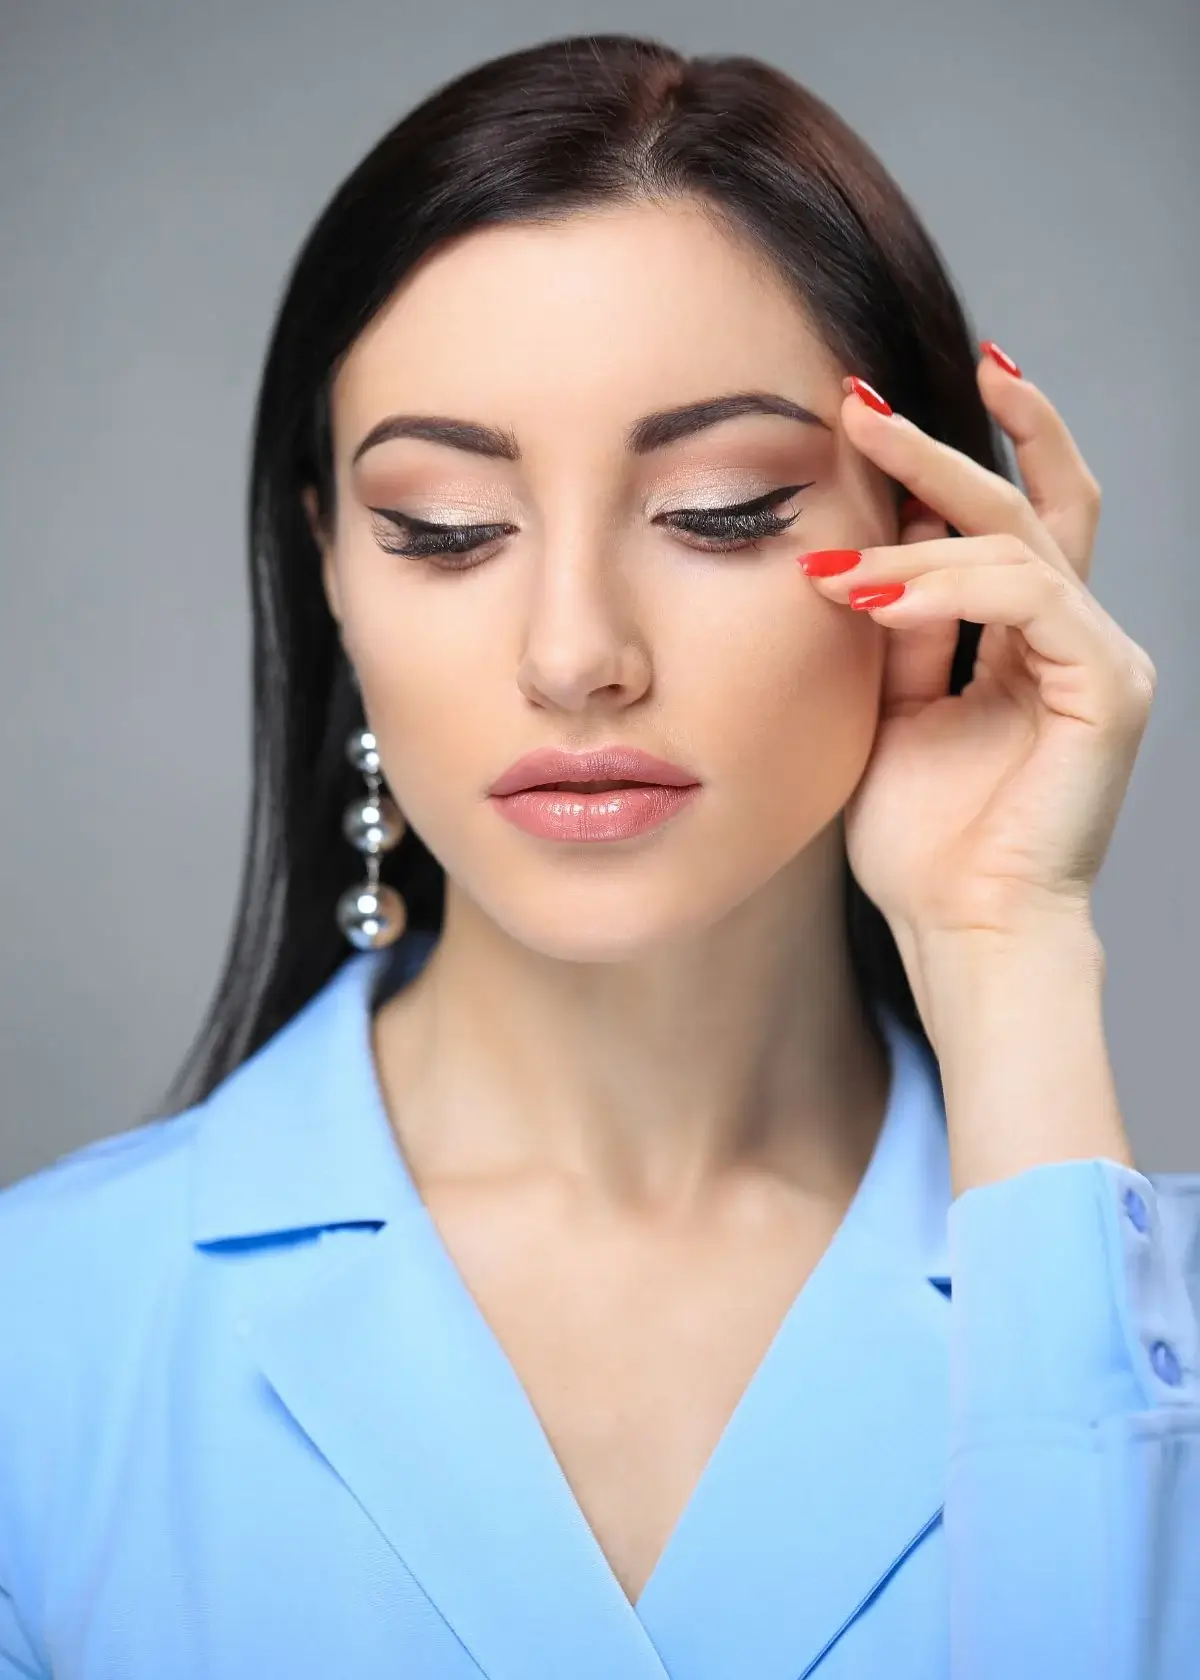 How to Dissolve Eyelash Extension Glue?